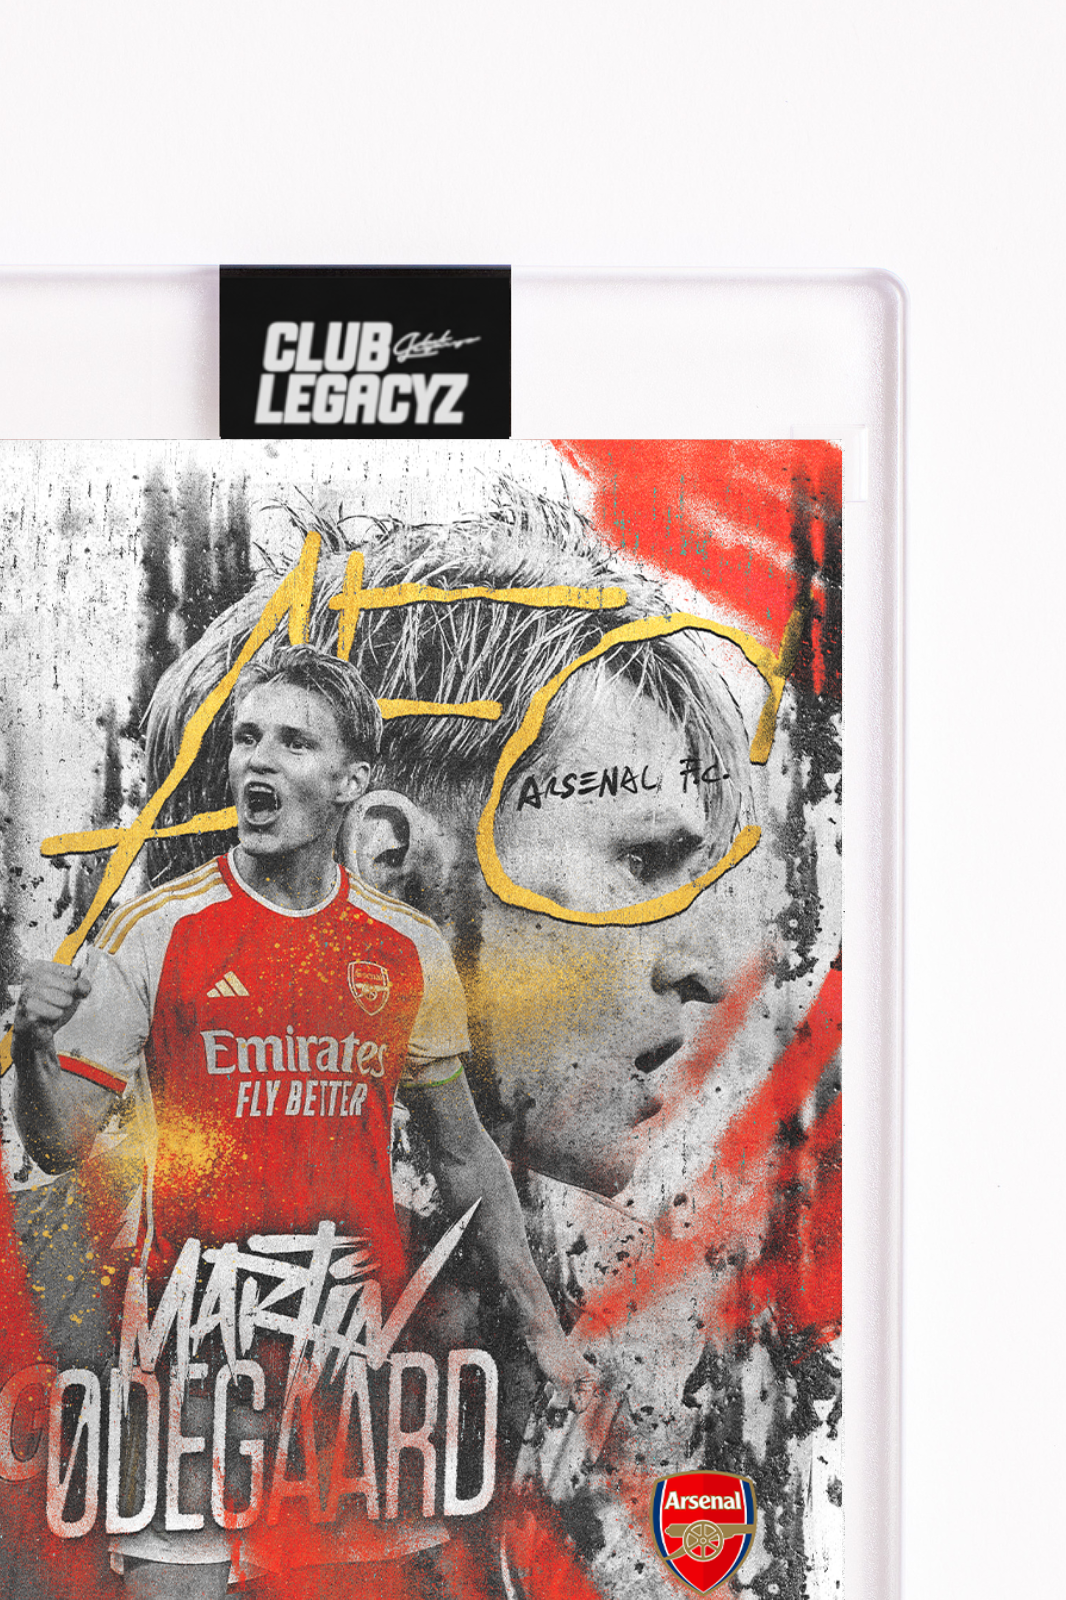 Arsenal FC - Martin Ødegaard Black & White Icon limited to 100